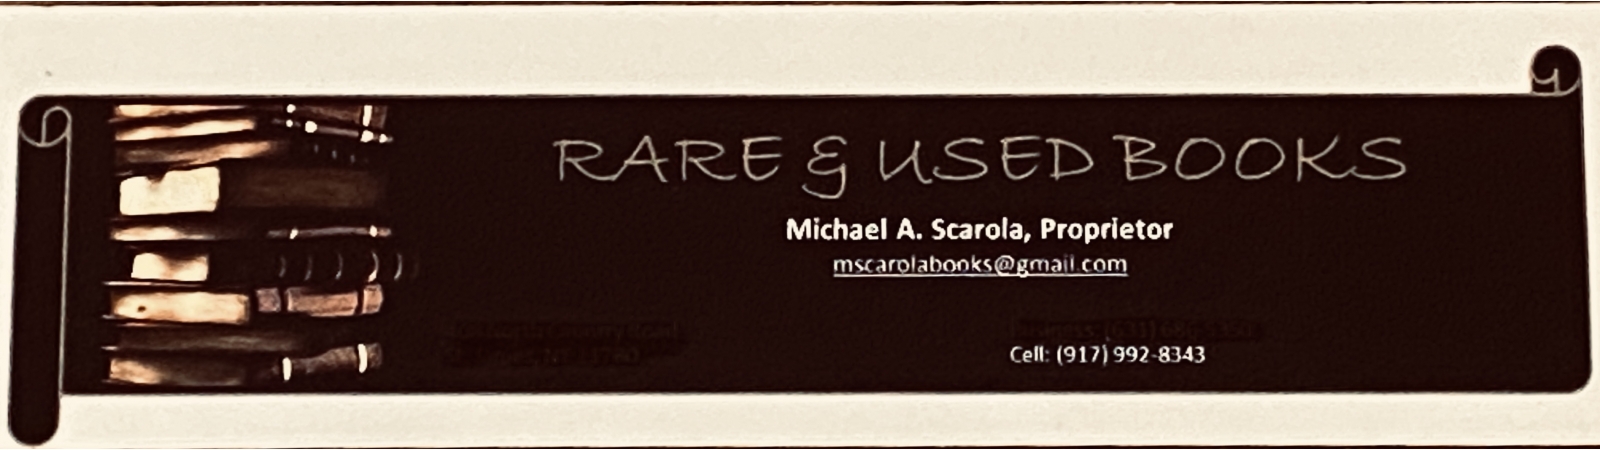 Michael Scarola Rare And Used Books LLC | AuctionNinja